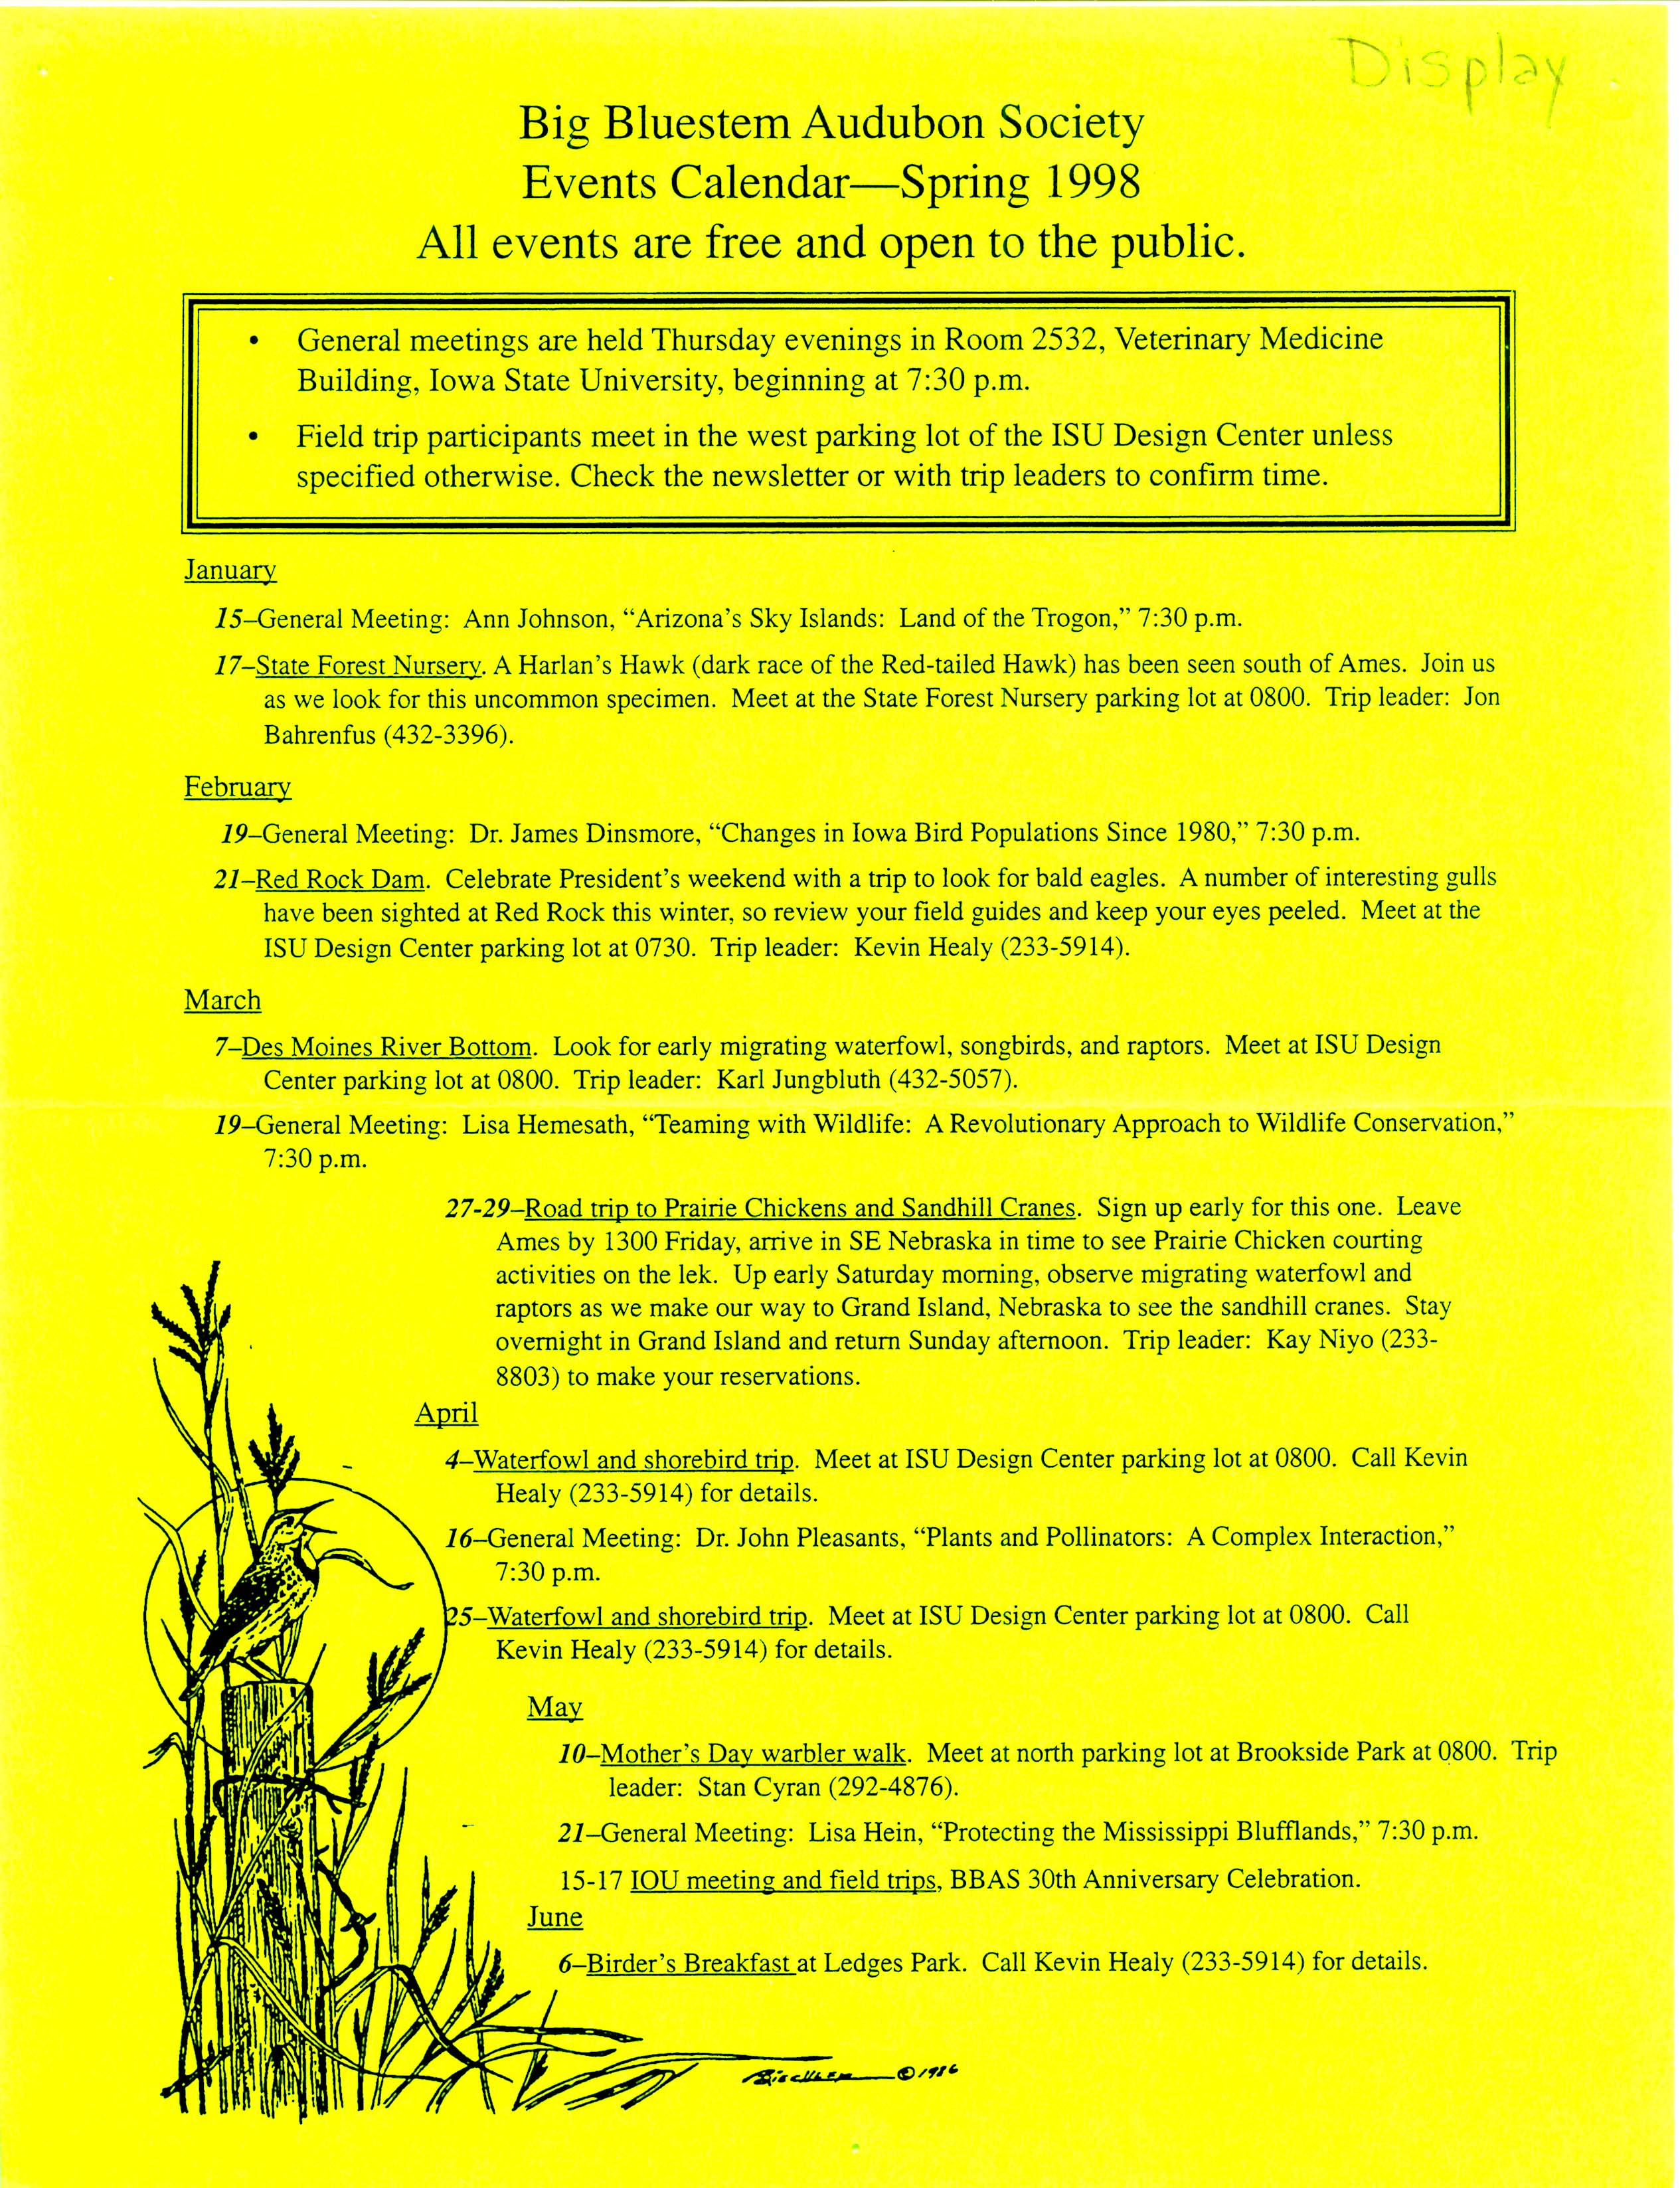 Big Bluestem Audubon Society Events Calendar, spring 1998